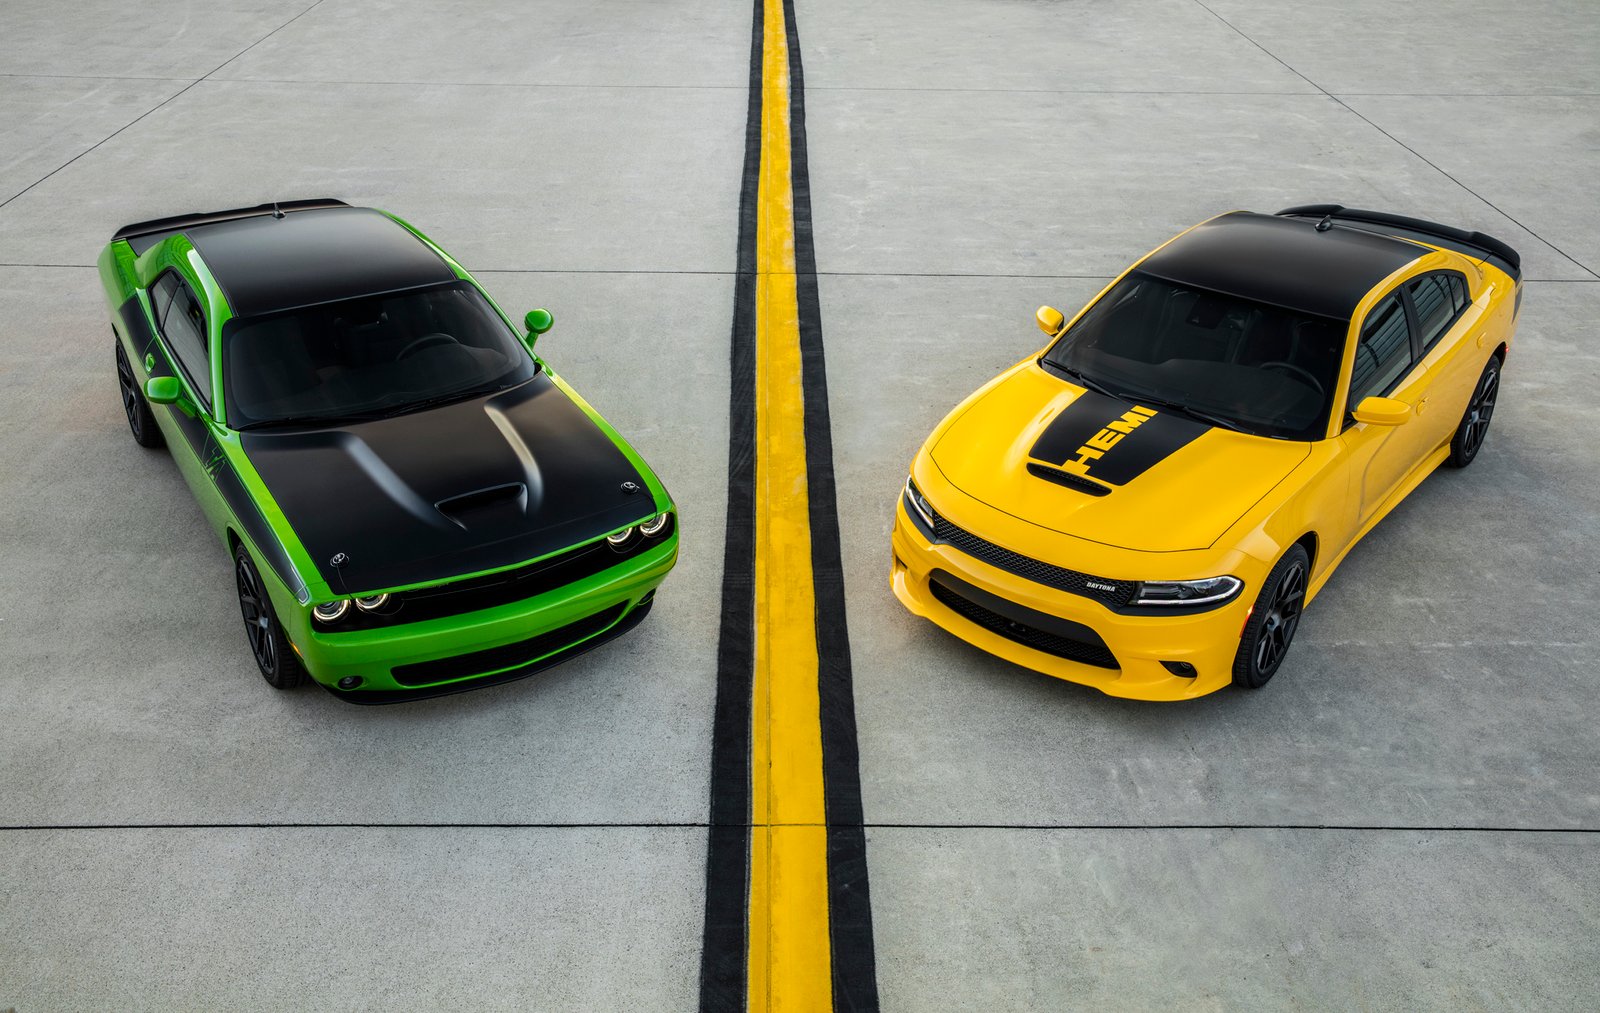 2017 Dodge Challenger T/A (left) and 2017 Dodge Charger Daytona